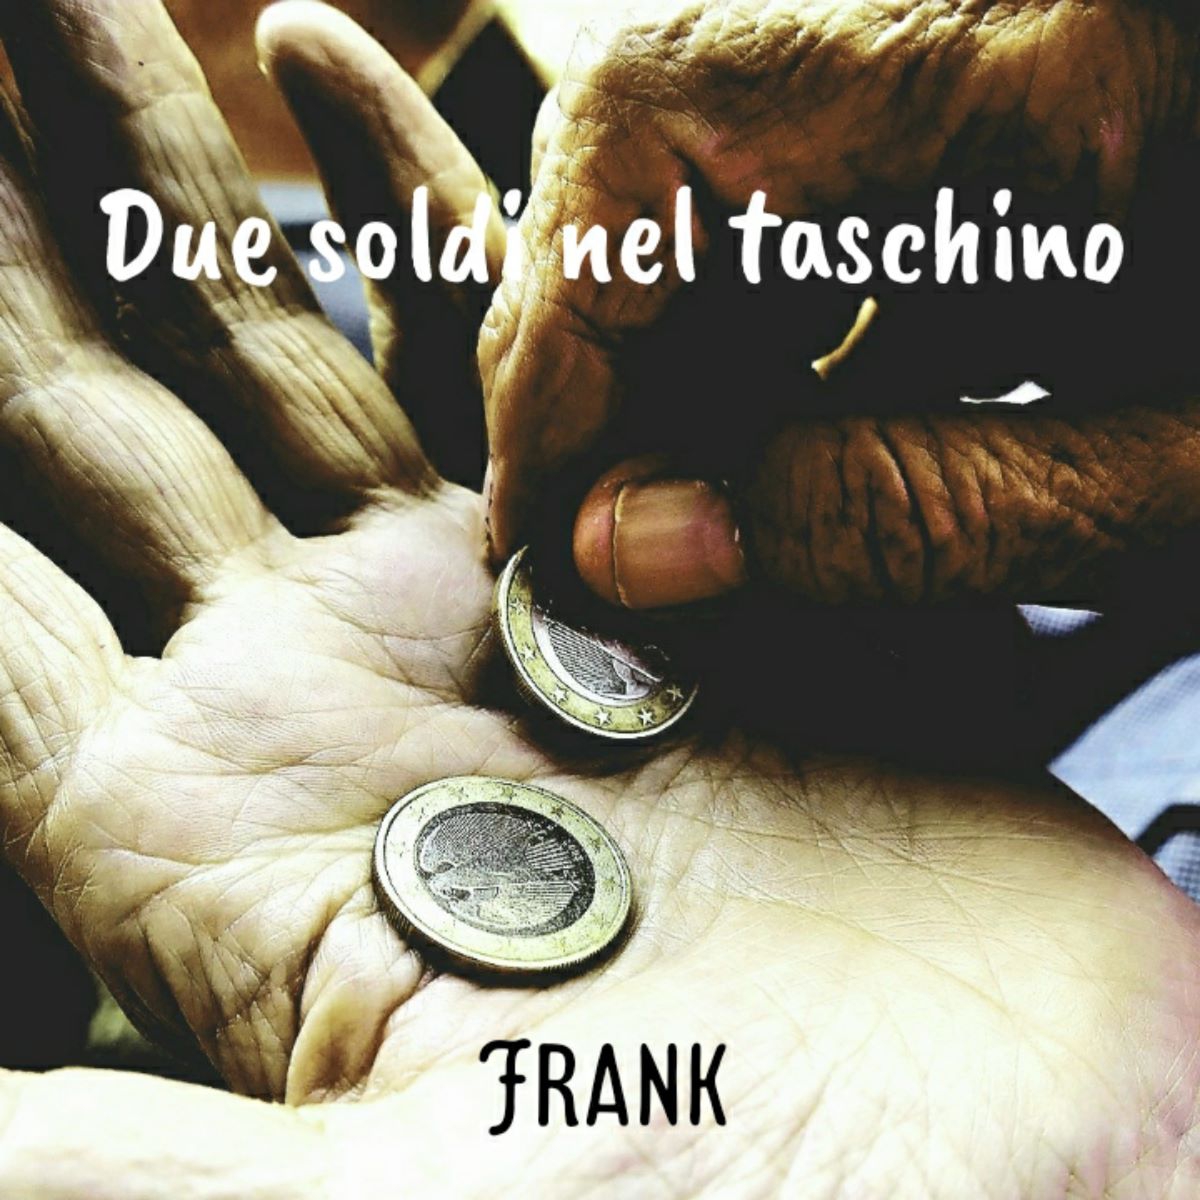 Frank - “Due soldi nel taschino”